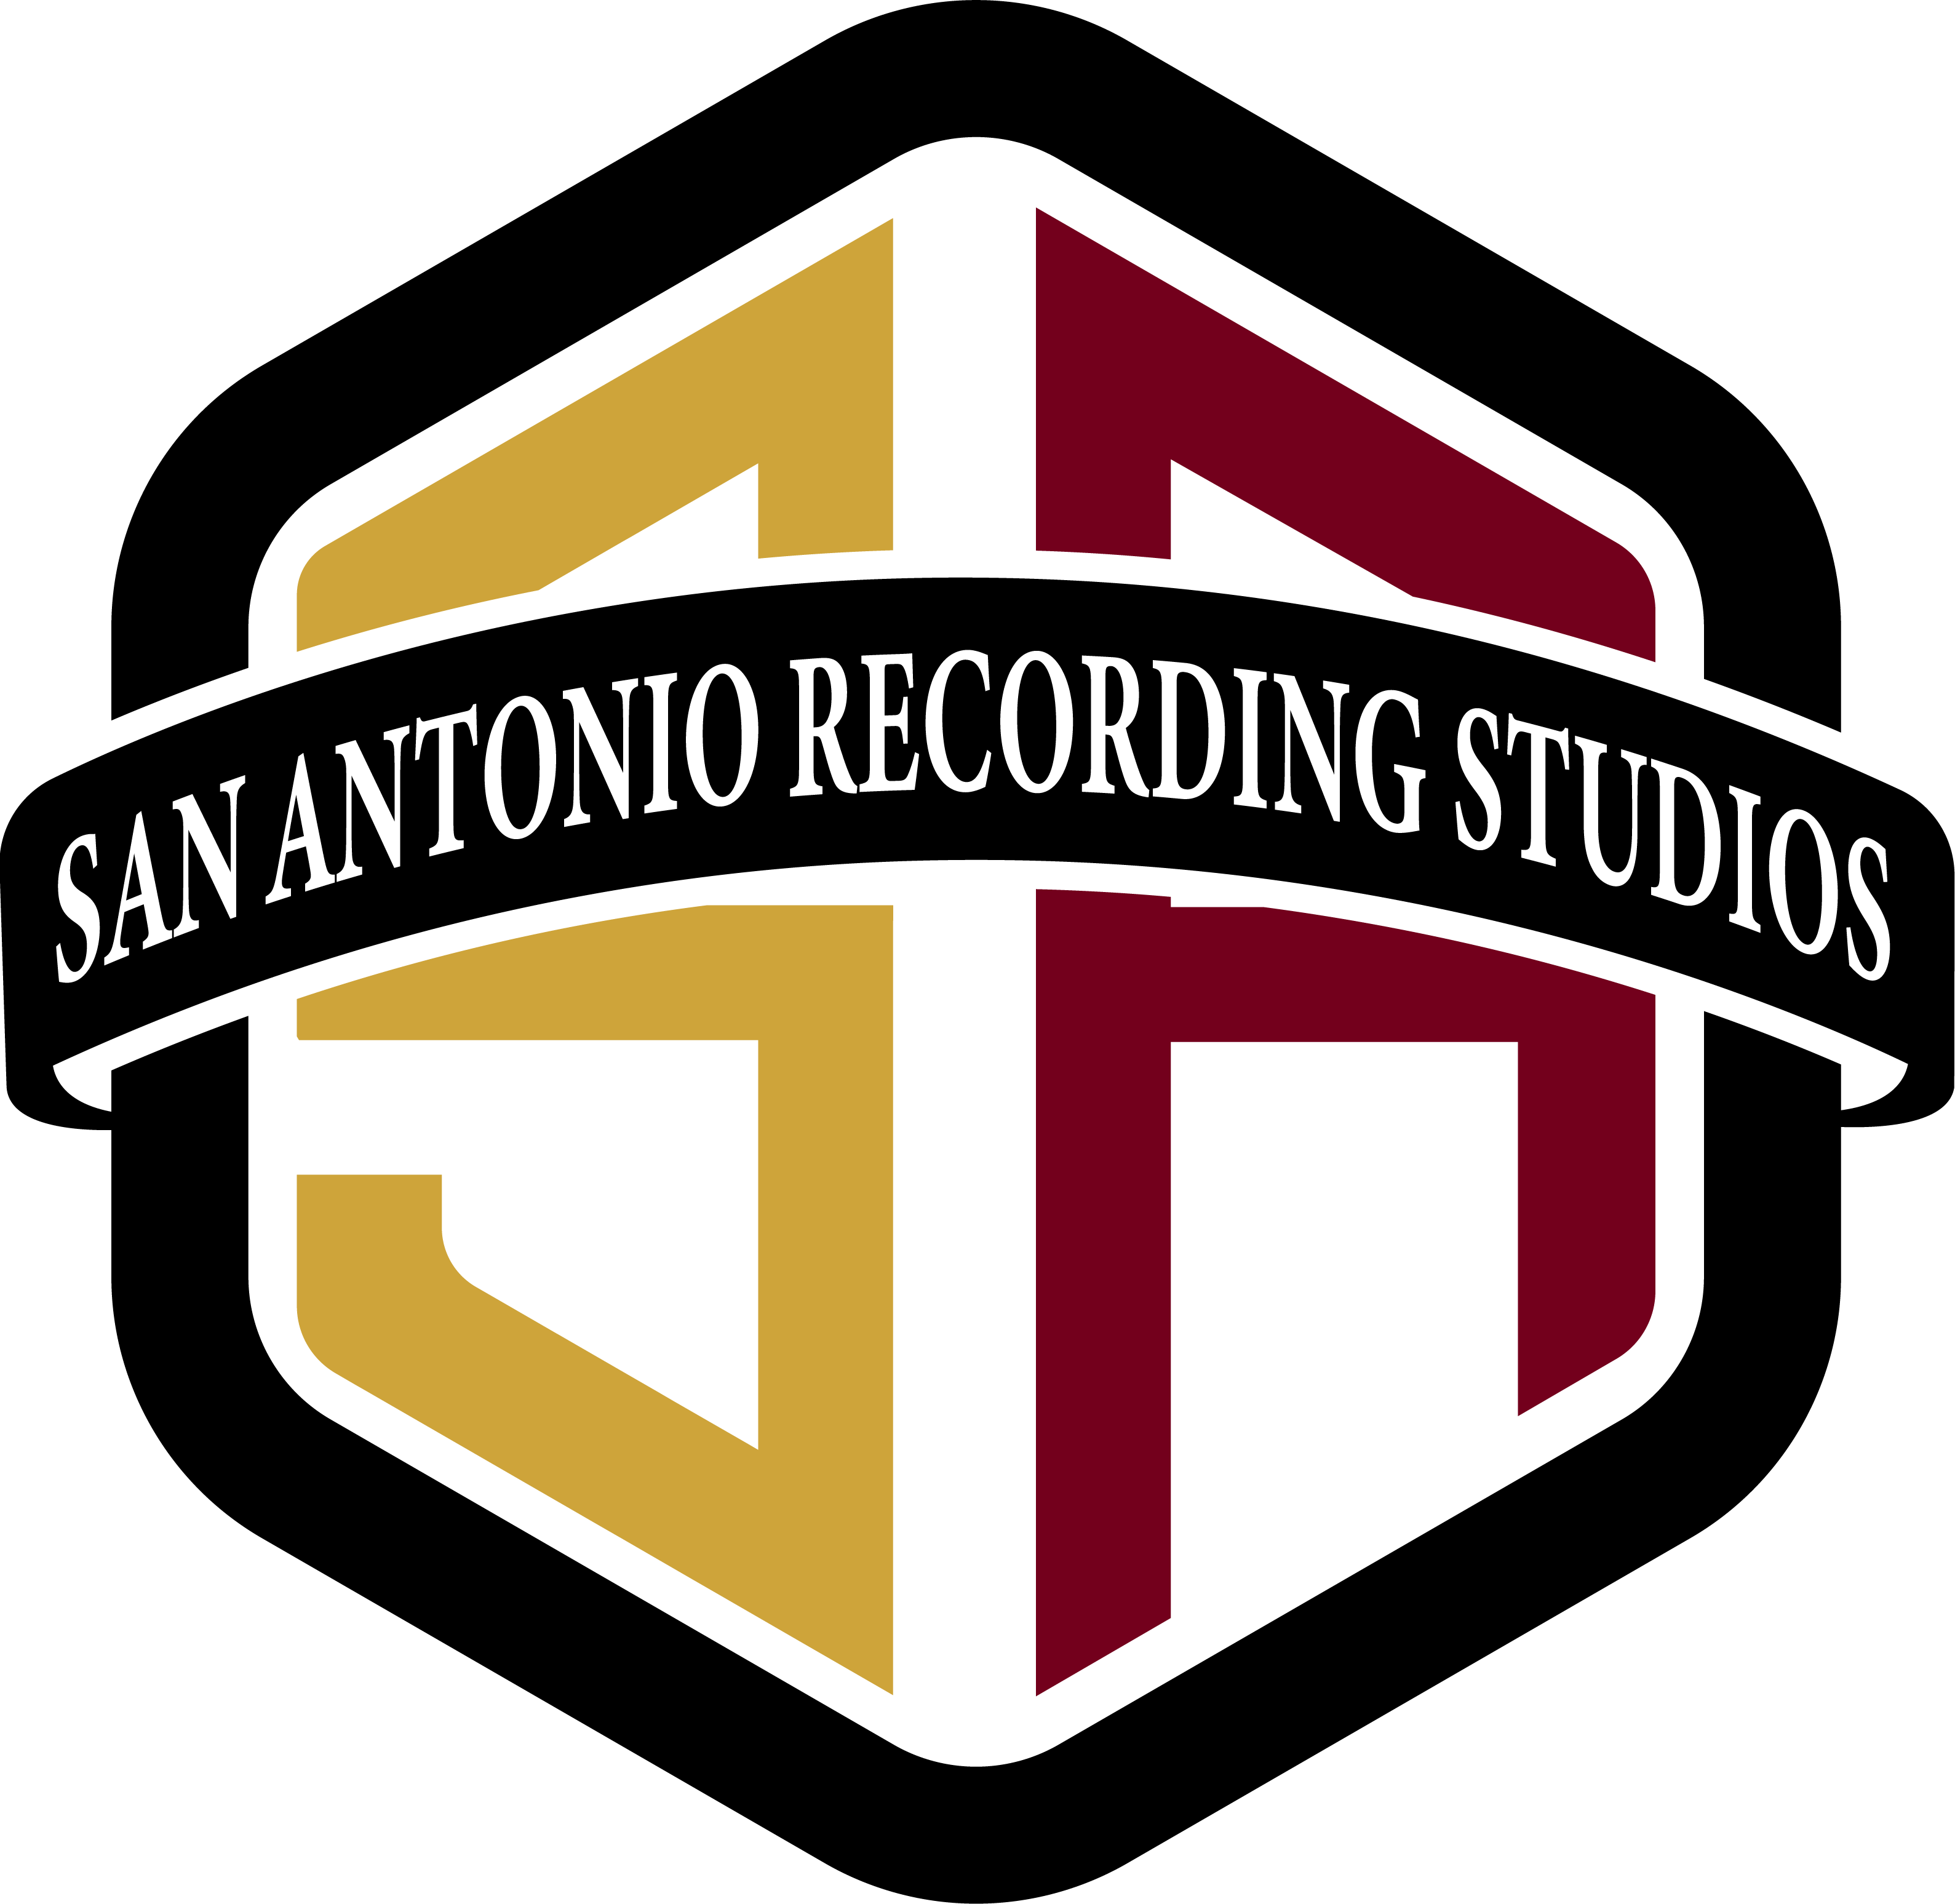 San Antonio Recording Studios